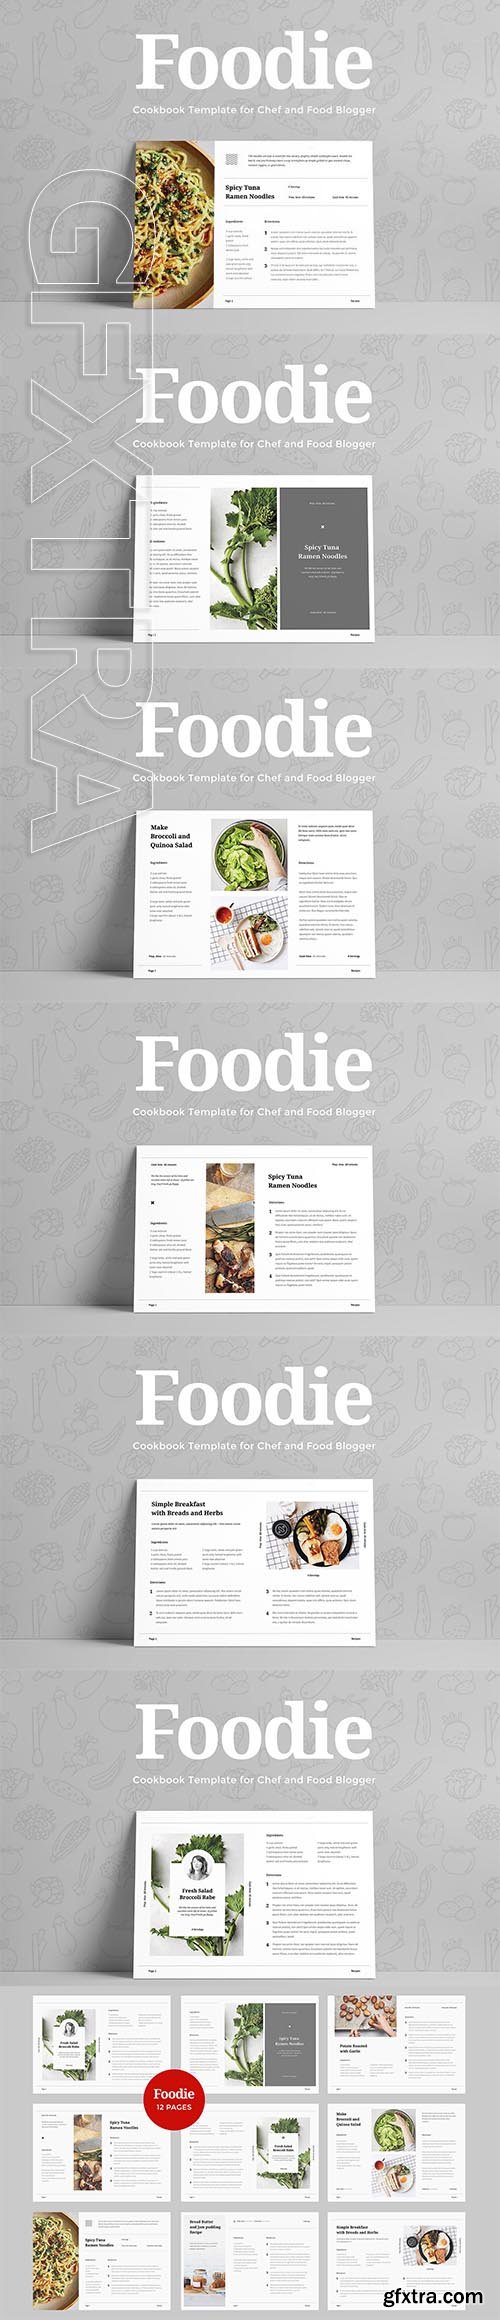 CreativeMarket - Foodie - Cookbook Template 2349379